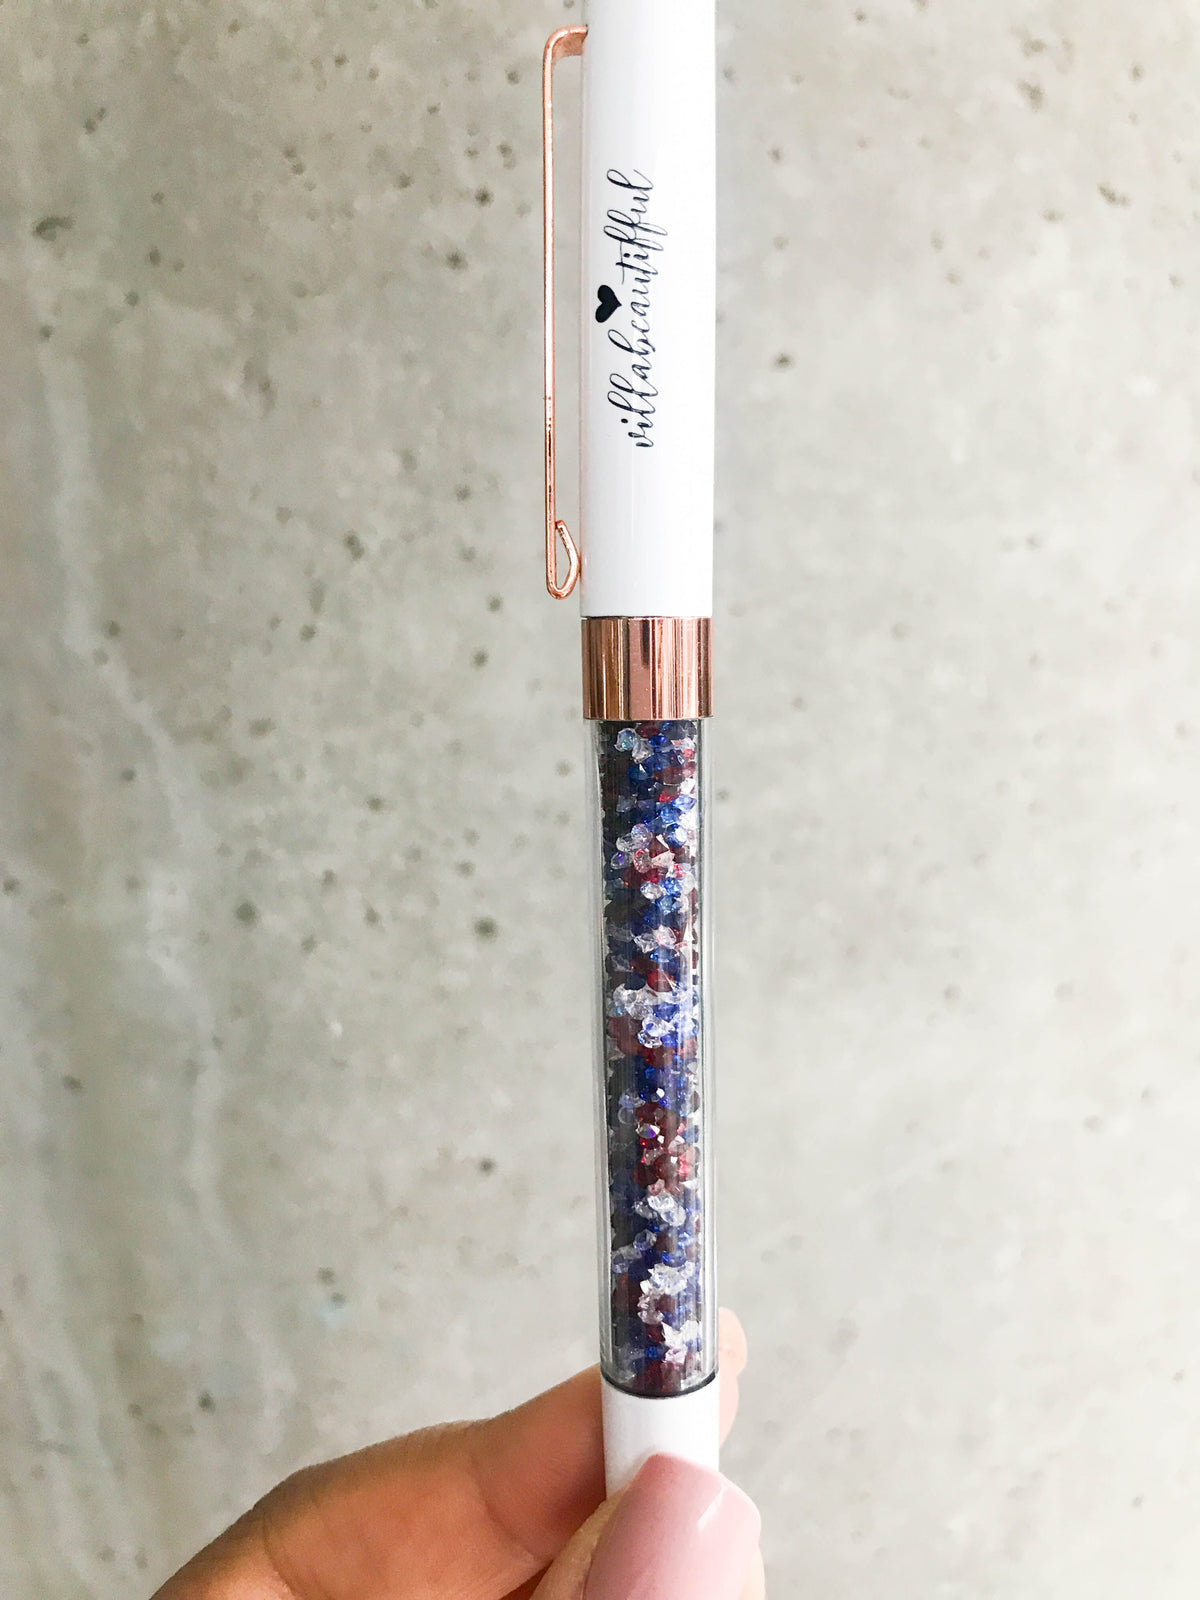 Fireworks Imperfect Crystal VBPen | limited pen